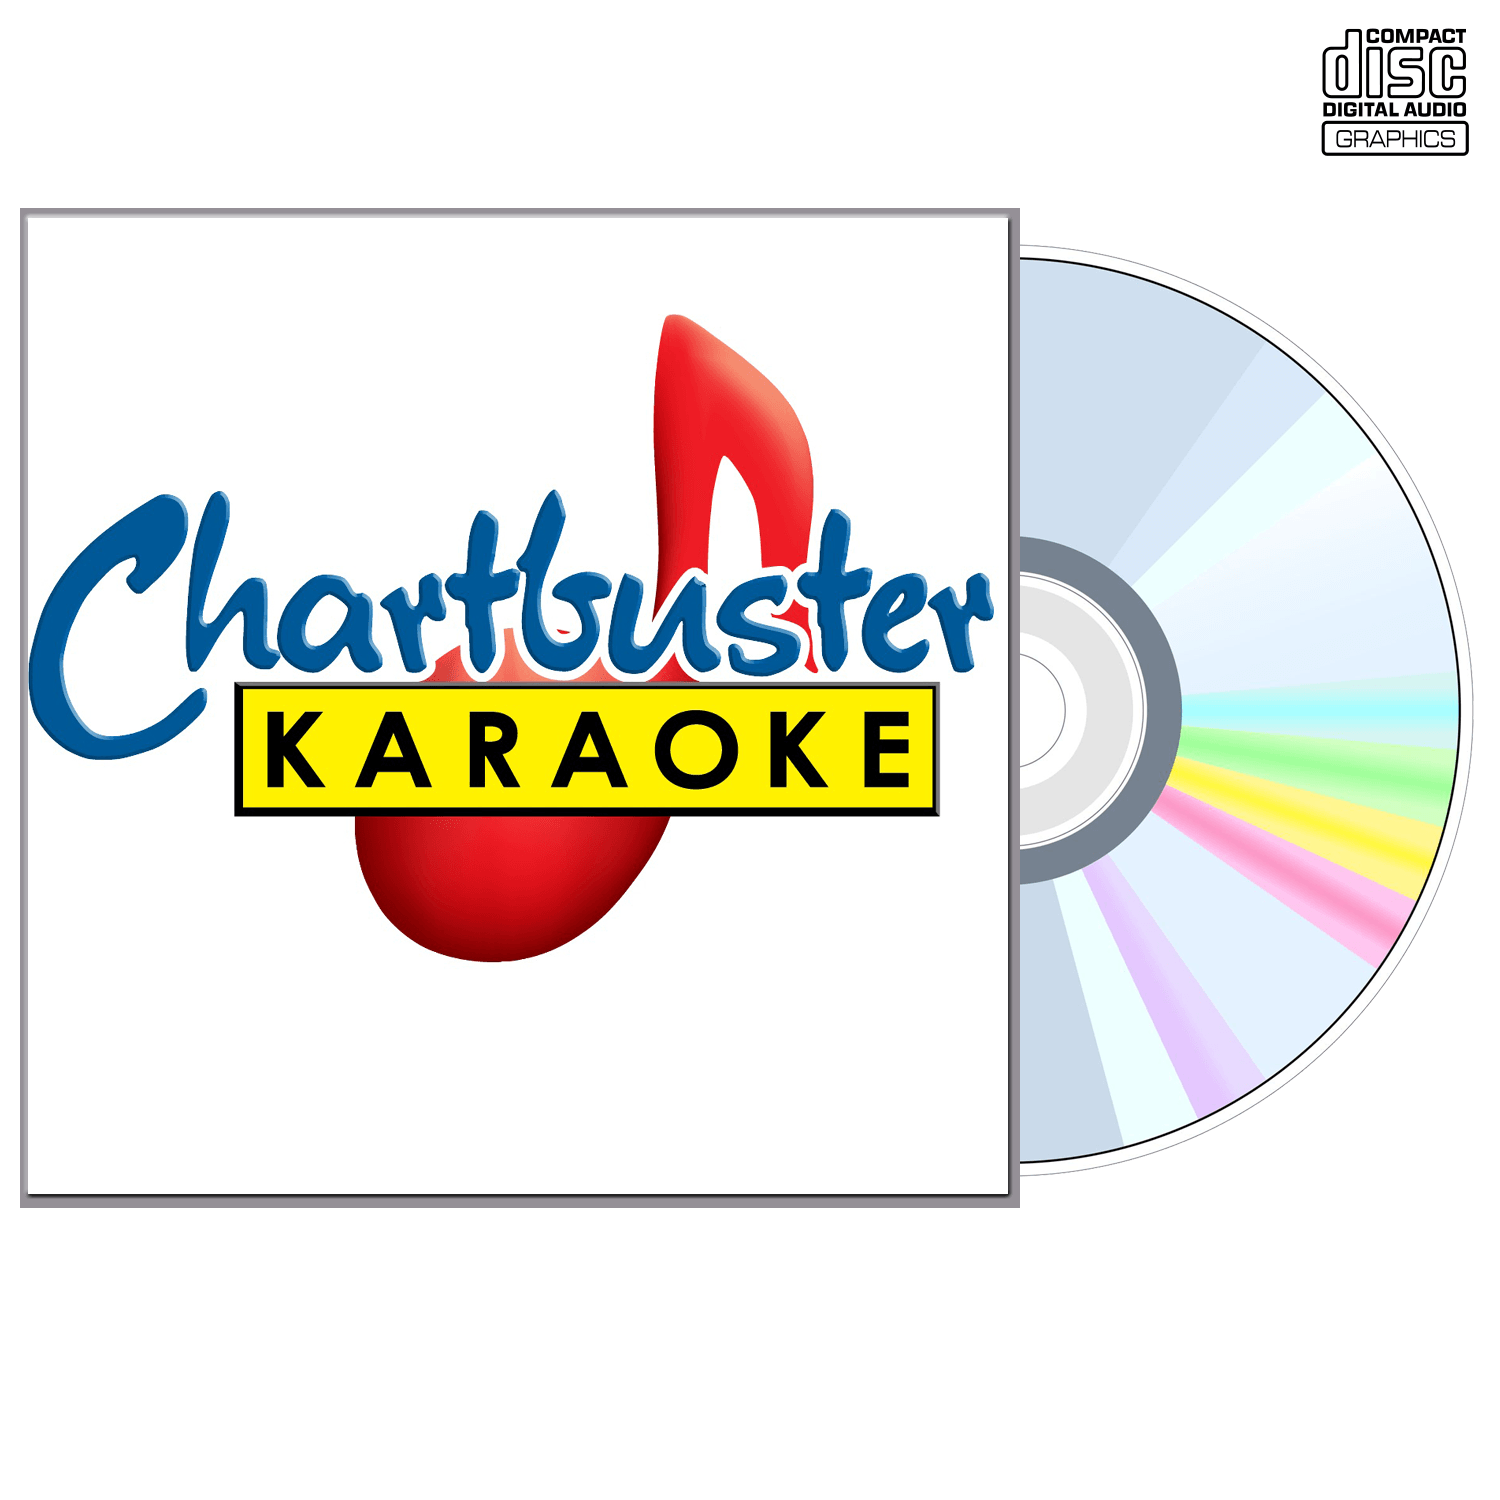 Foo Fighters Vol 1 - CD+G - Chartbuster Karaoke - Karaoke Home Entertainment